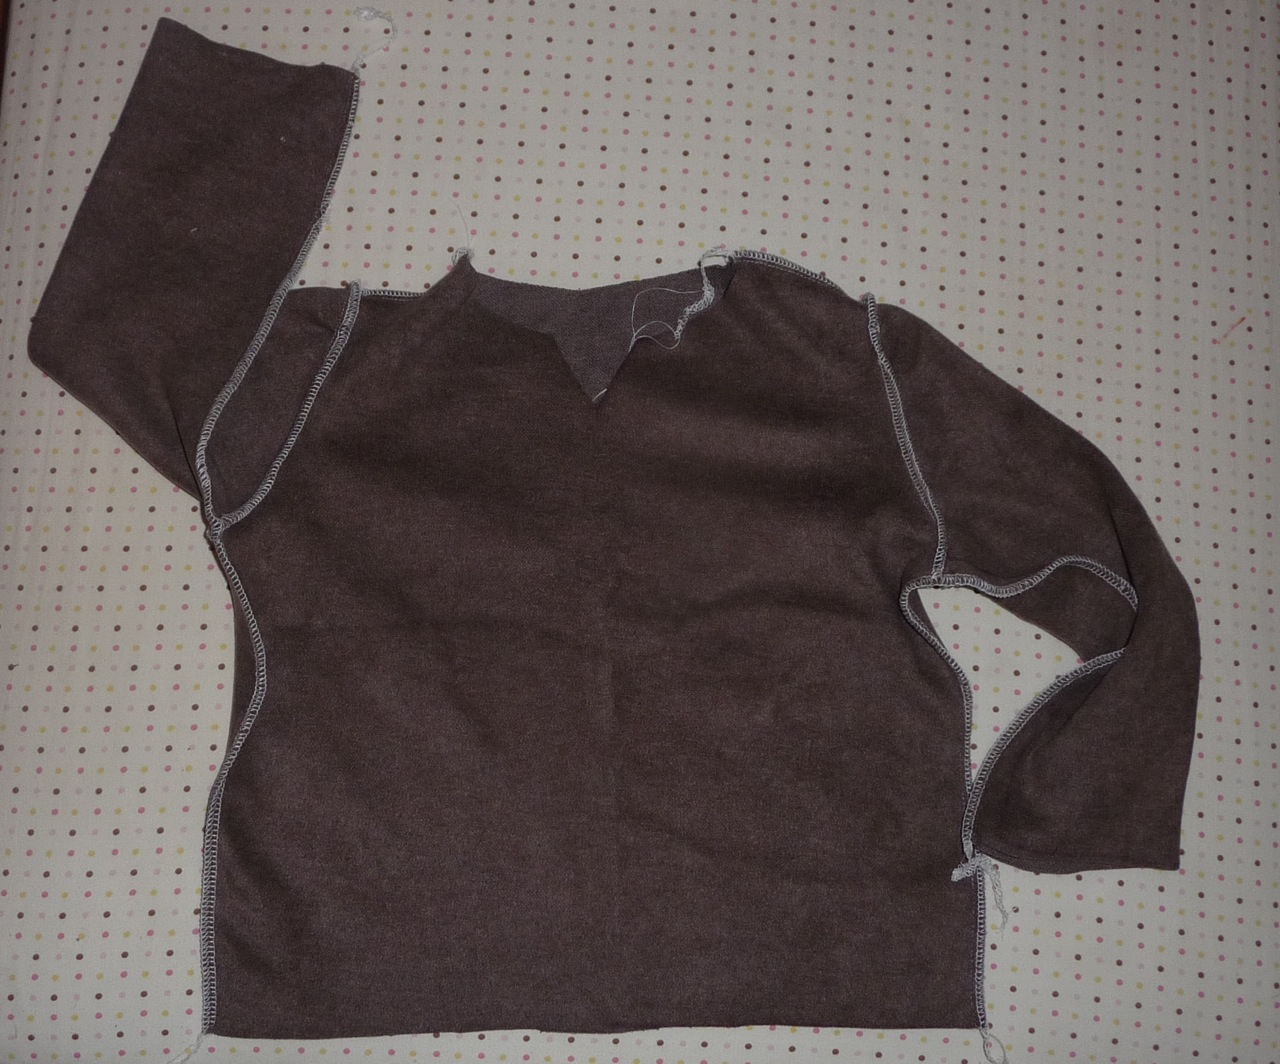 Handmade Intentions: Hooded Sweatshirt Tutorial